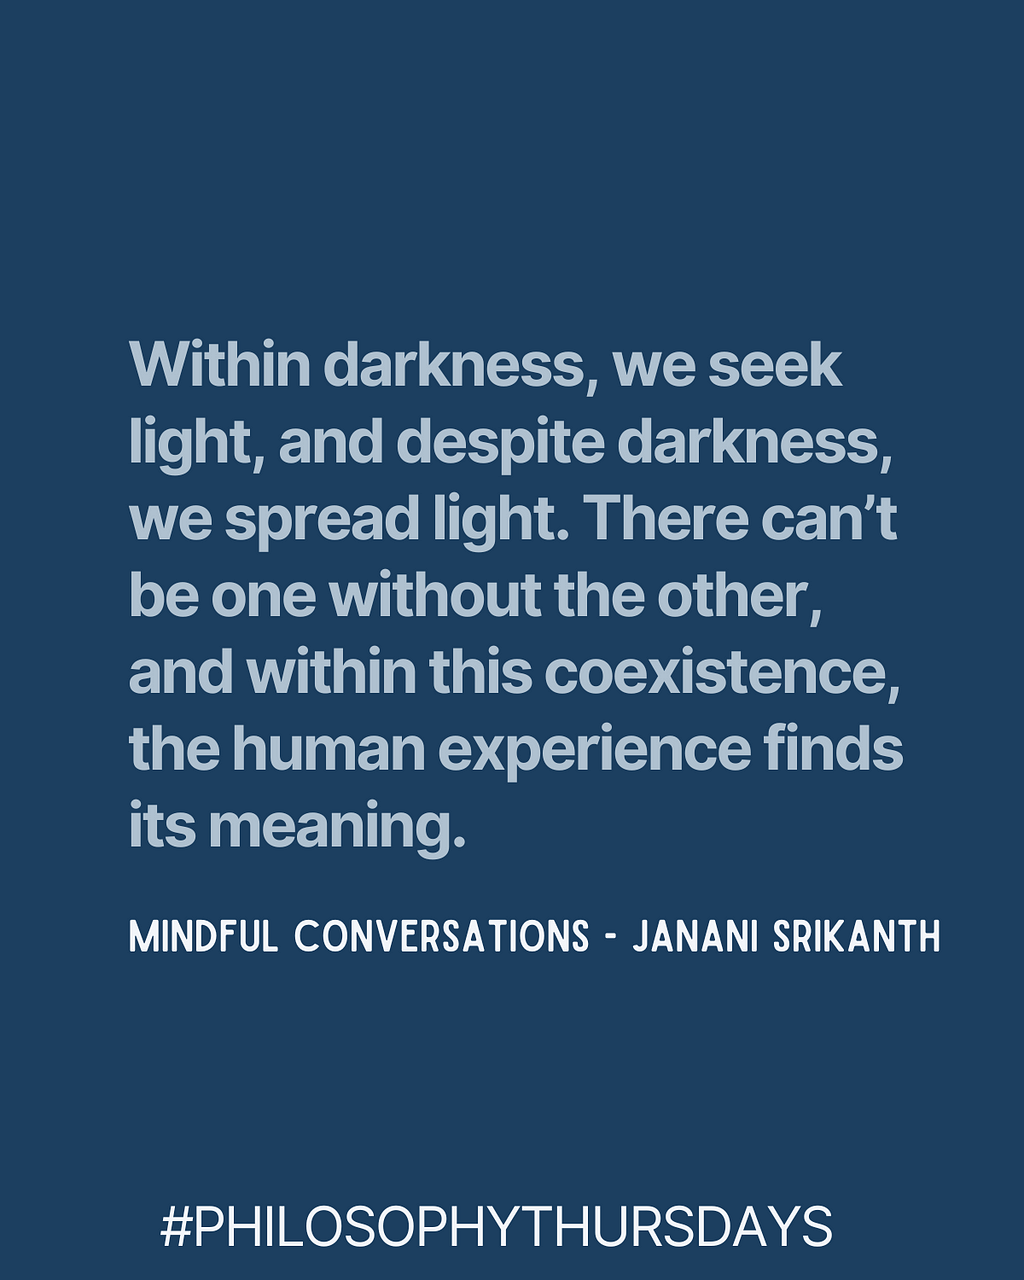 JANANI SRIKANTH’S QUOTE ABOUT LIFE. MINDFUL CONVERSATIONS